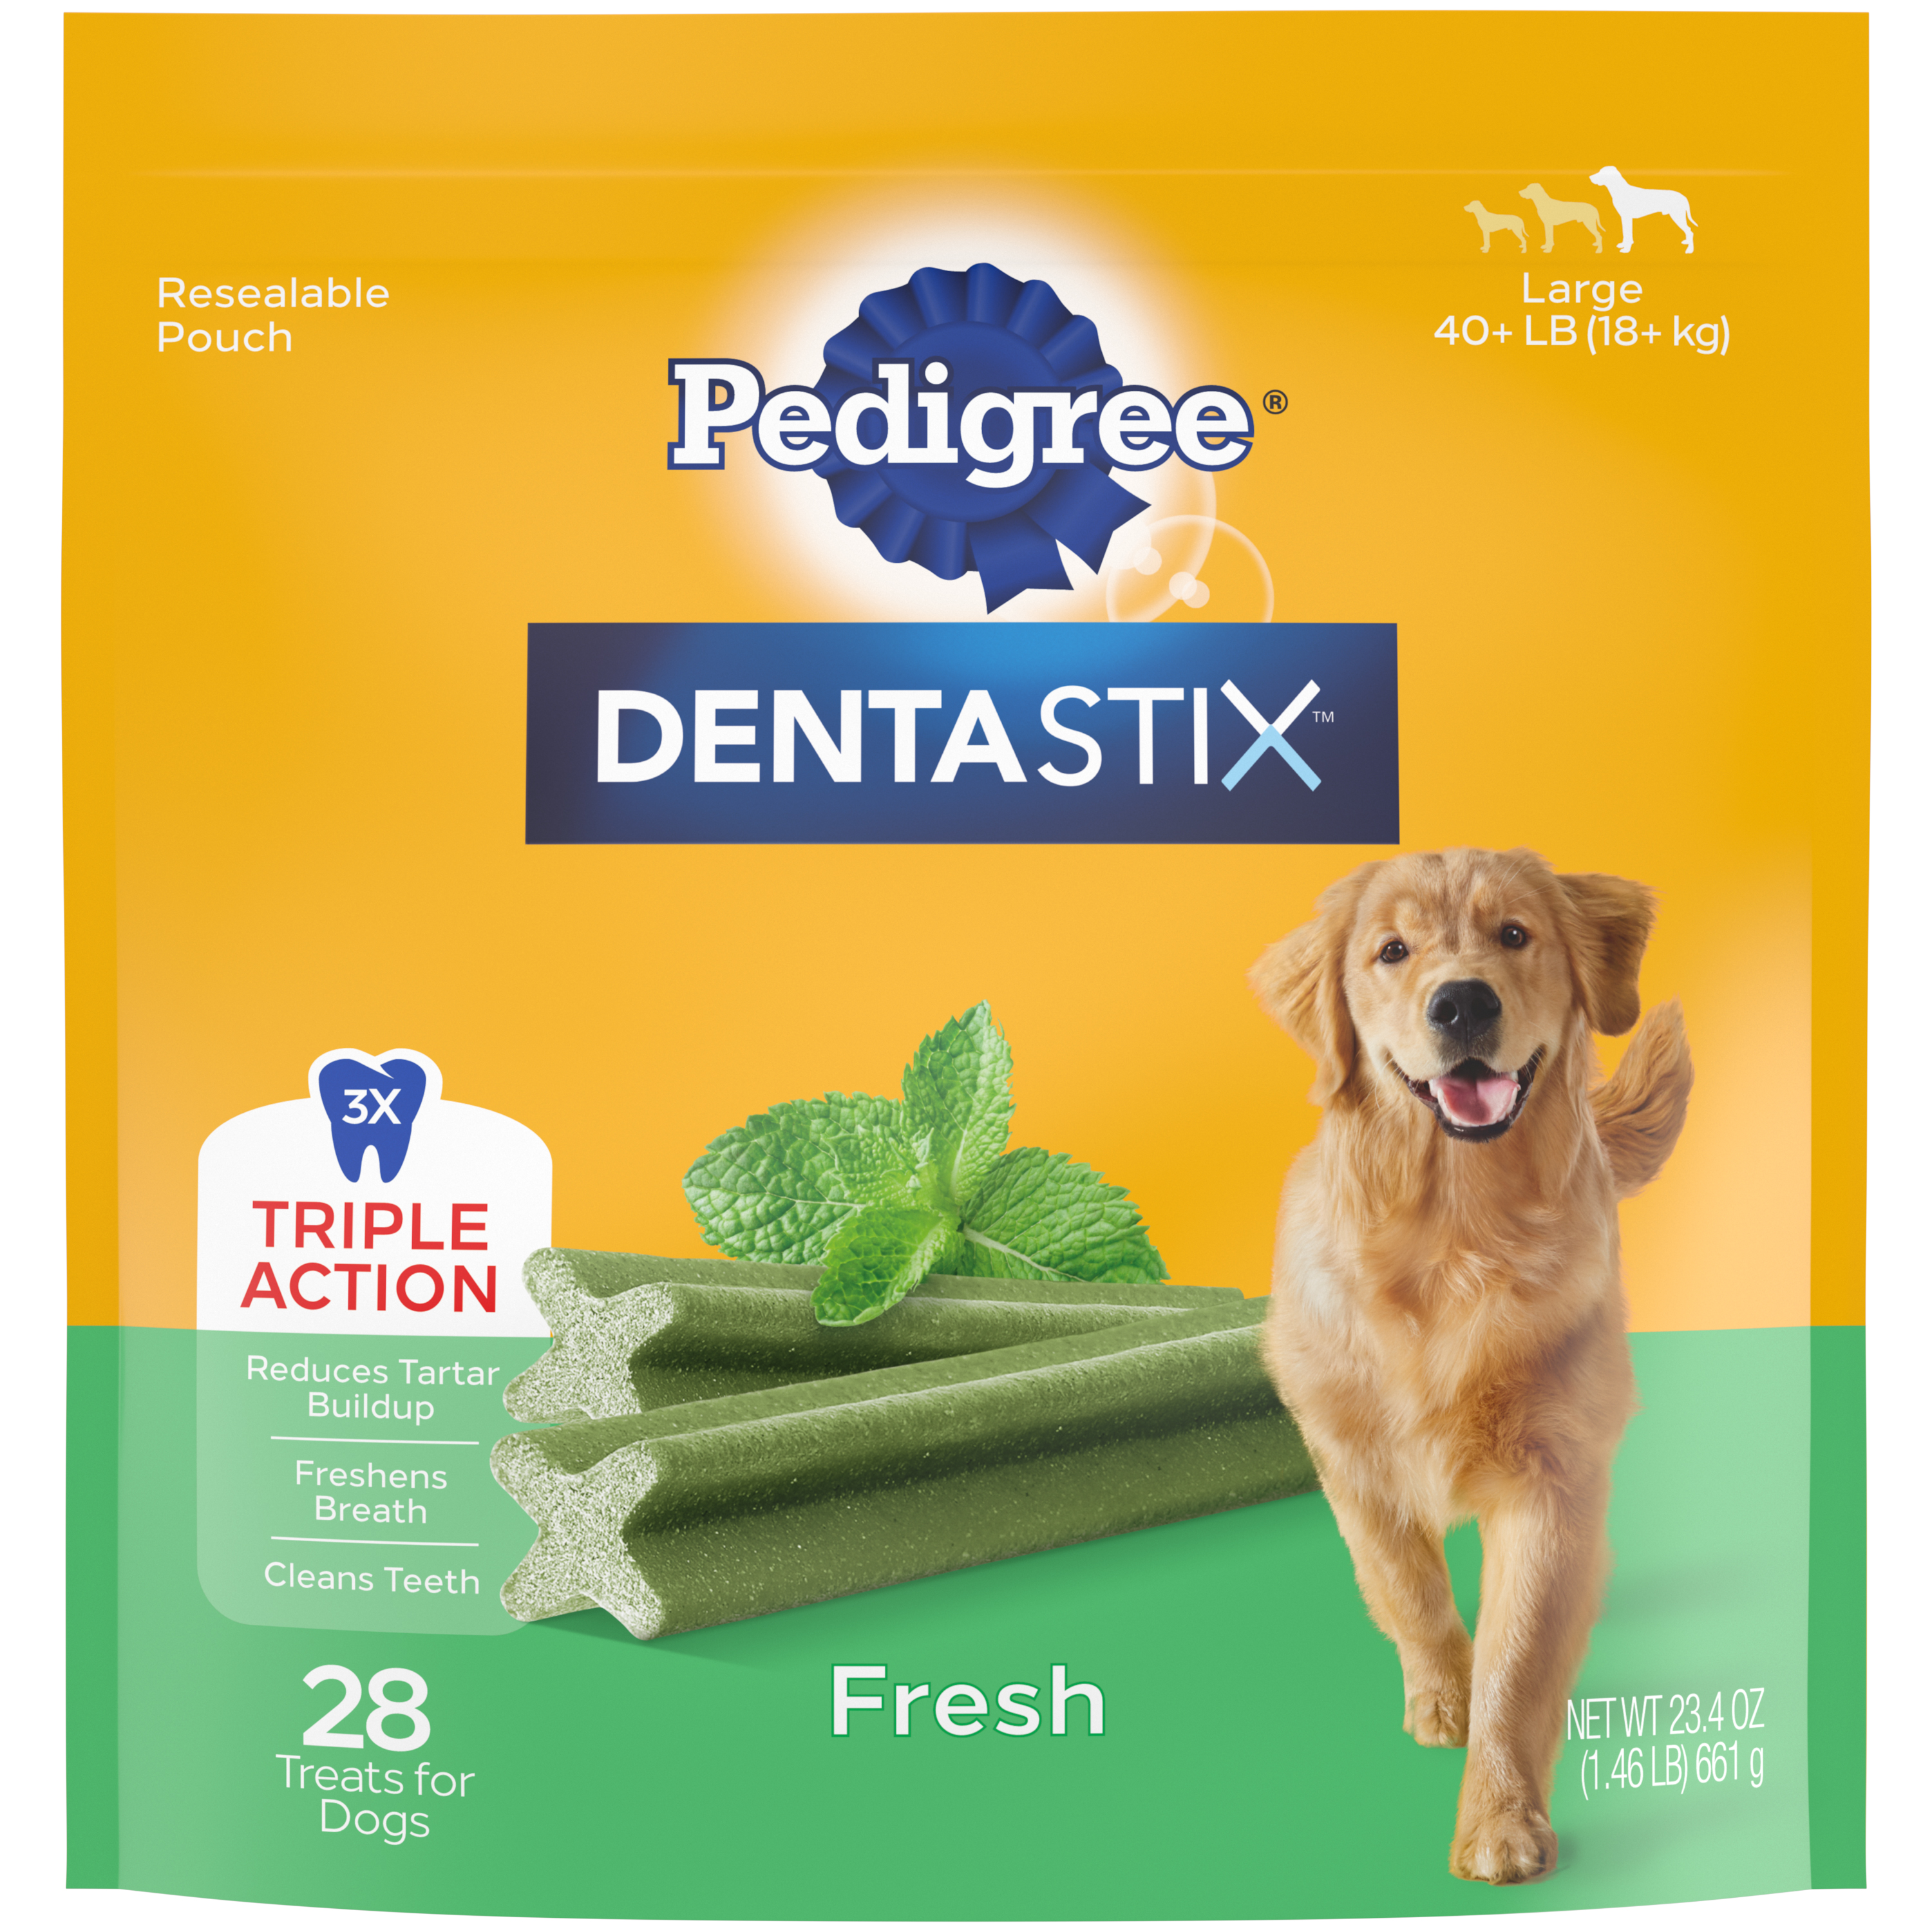 1.46# Pedigree Dentastix Fresh Large 28ct - Health/First Aid